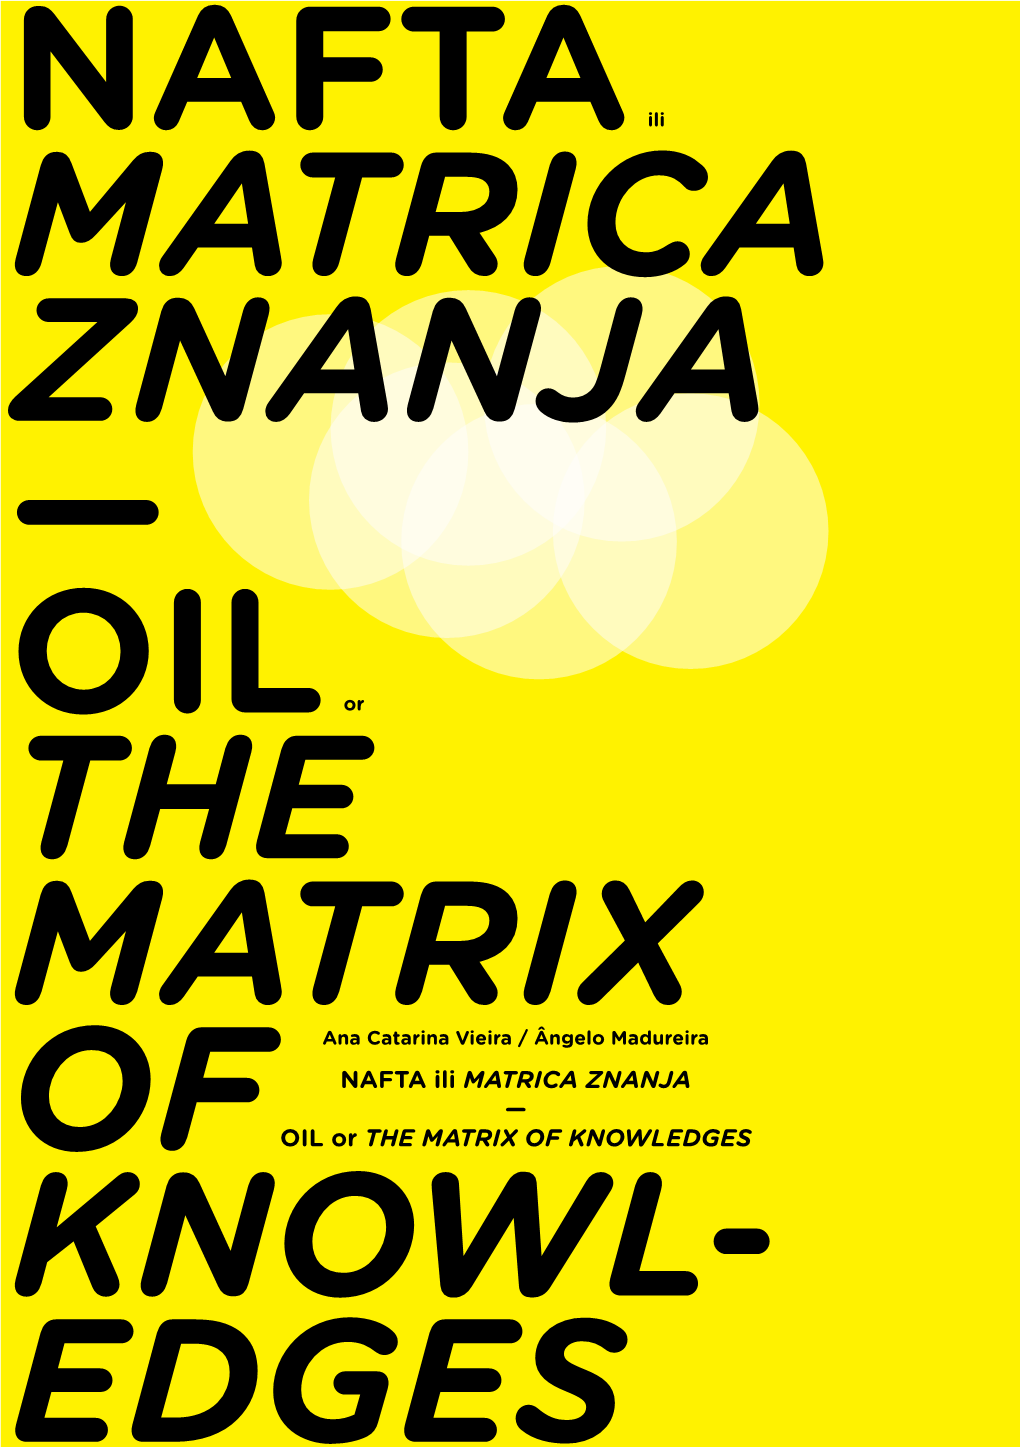 NAFTA Ili MATRICA ZNANJA — OIL Or the MATRIX of KNOWLEDGES